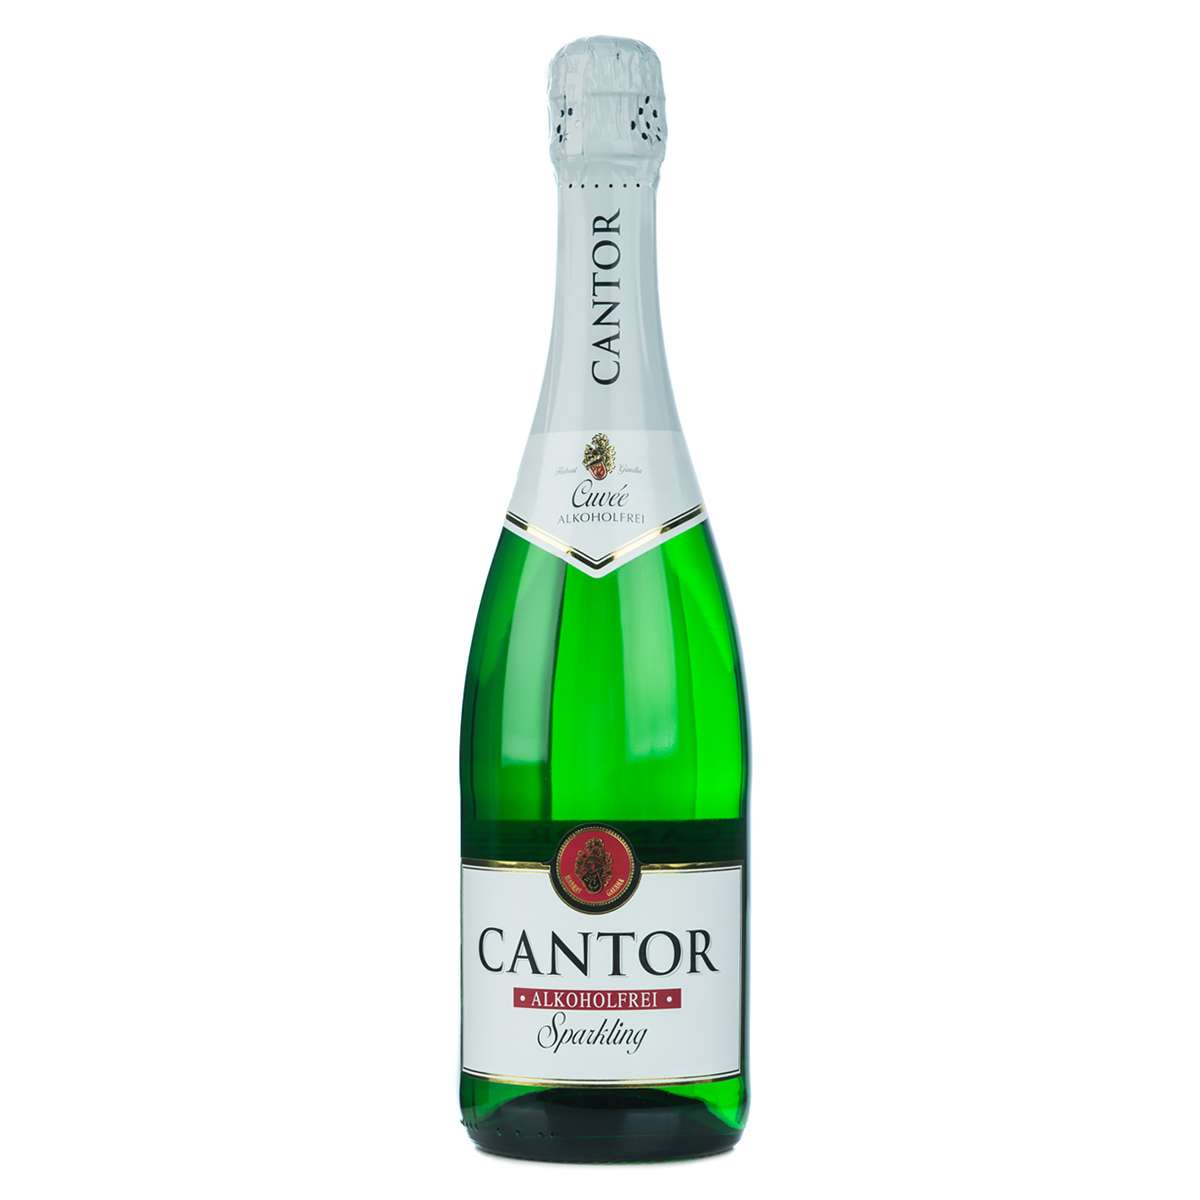 Cantor alkoholfreier Sekt 0,75l online bestellen | getraenkedienst.com